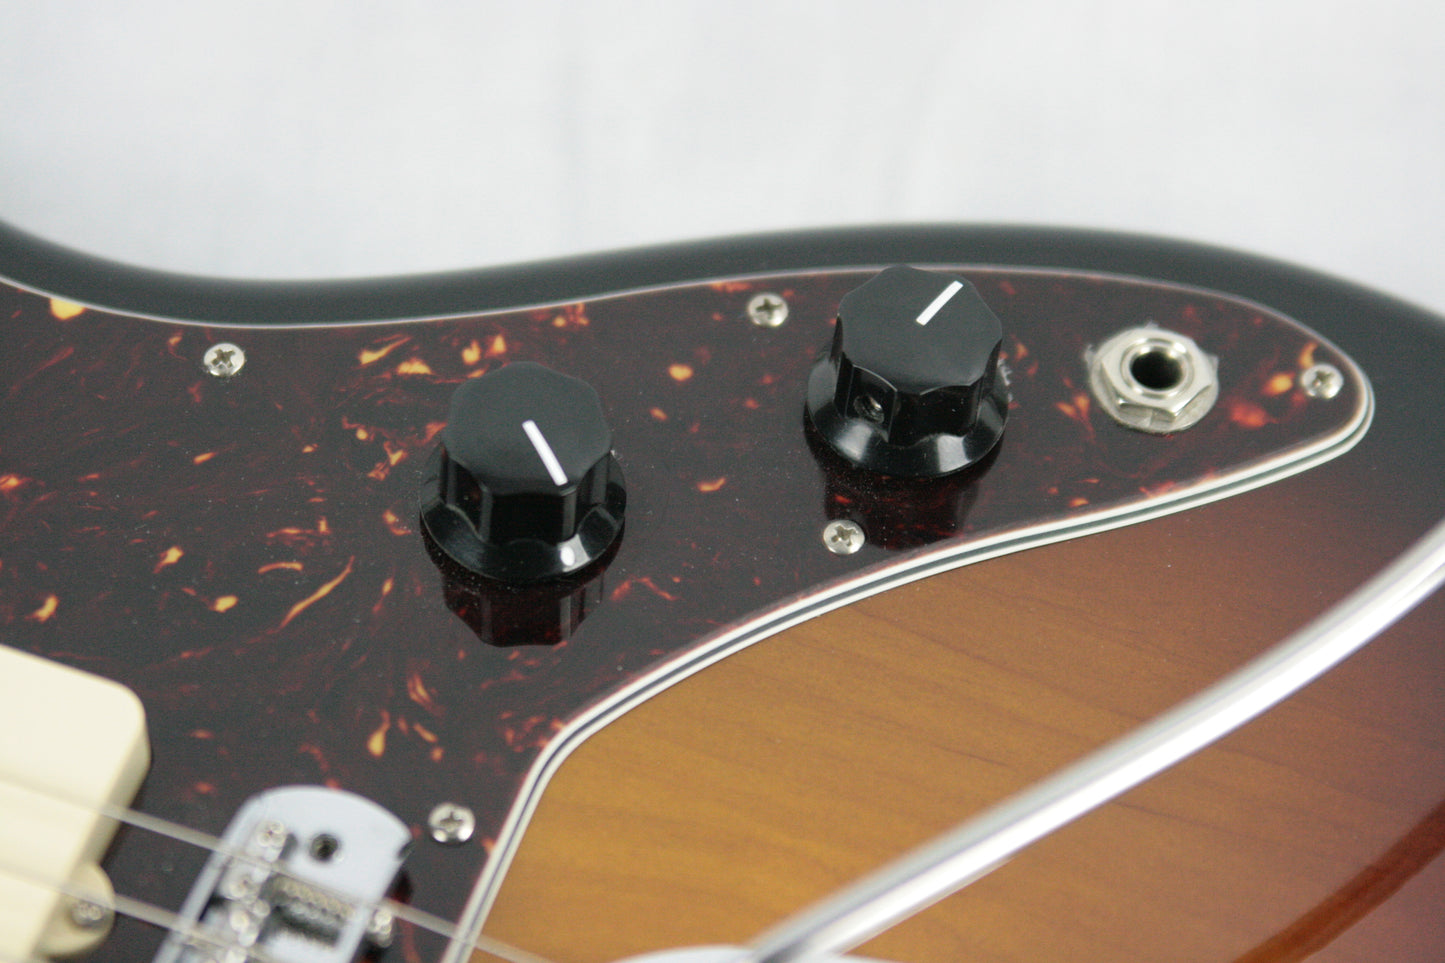 2012 Fender Bass VI Pawn Shop Vintage Sunburst Electric Baritone Guitar! 6-string